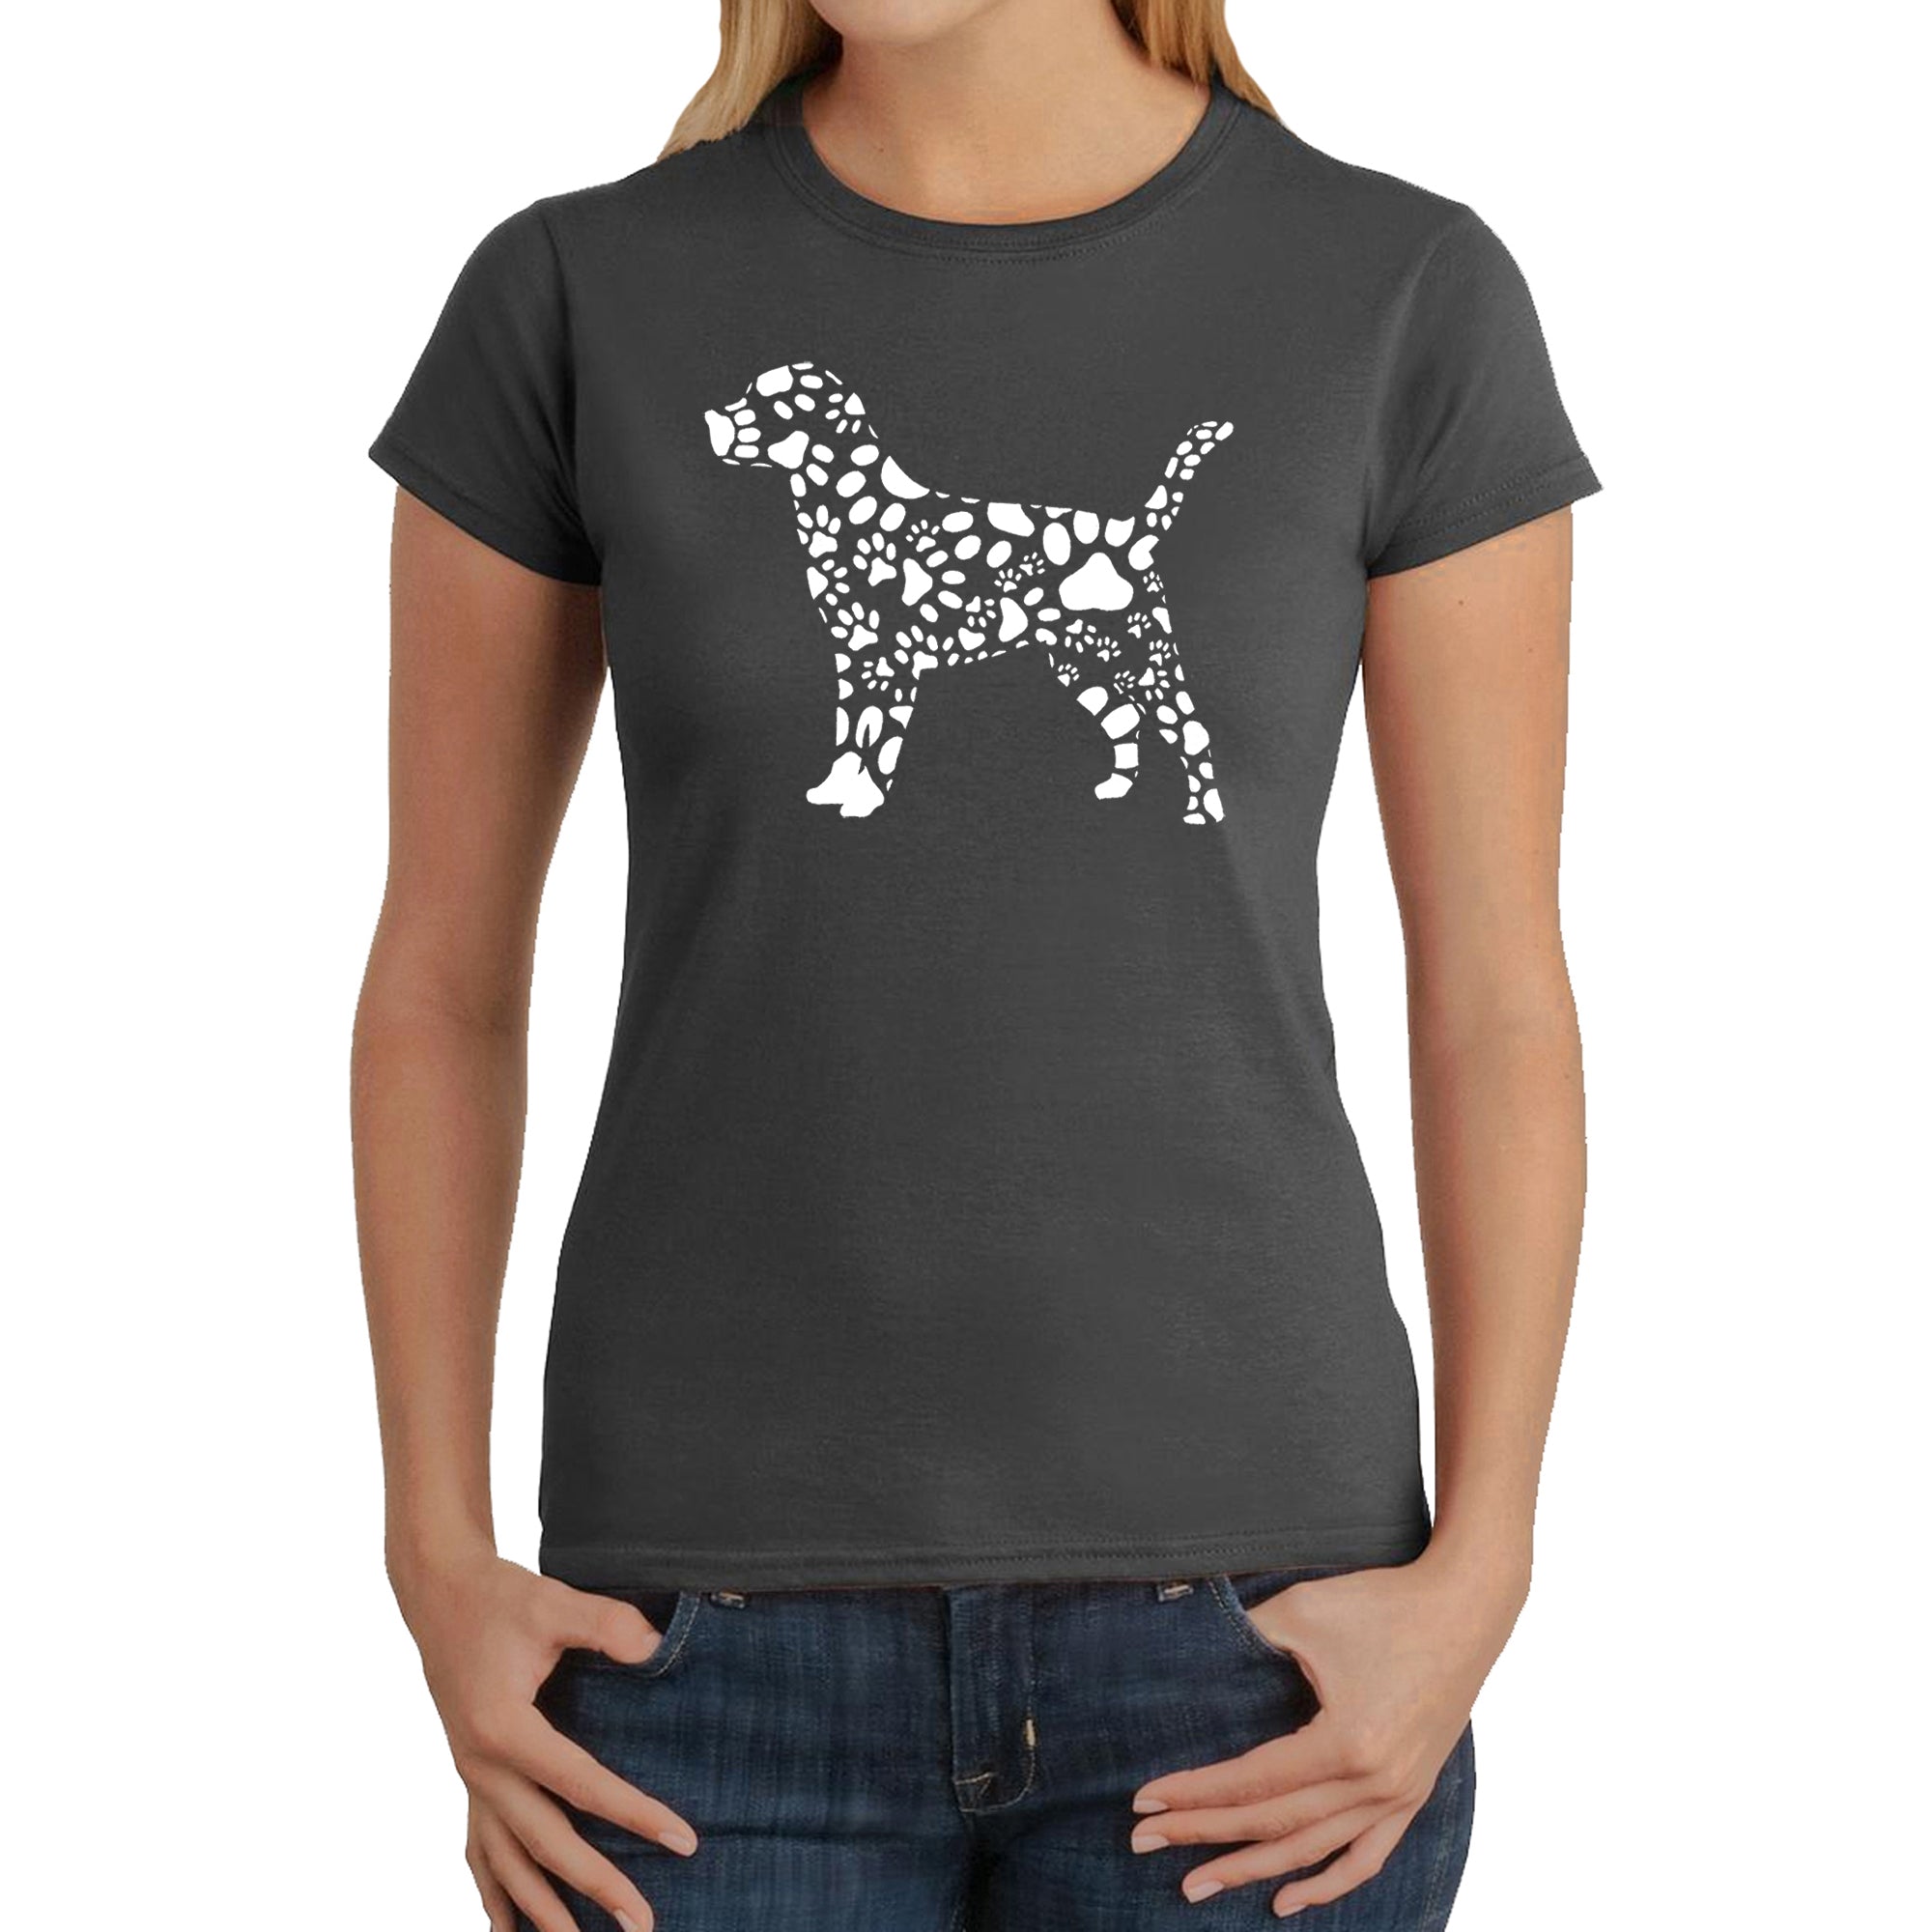 Dog Paw Prints - Women's Word Art T-Shirt - Grey - XS